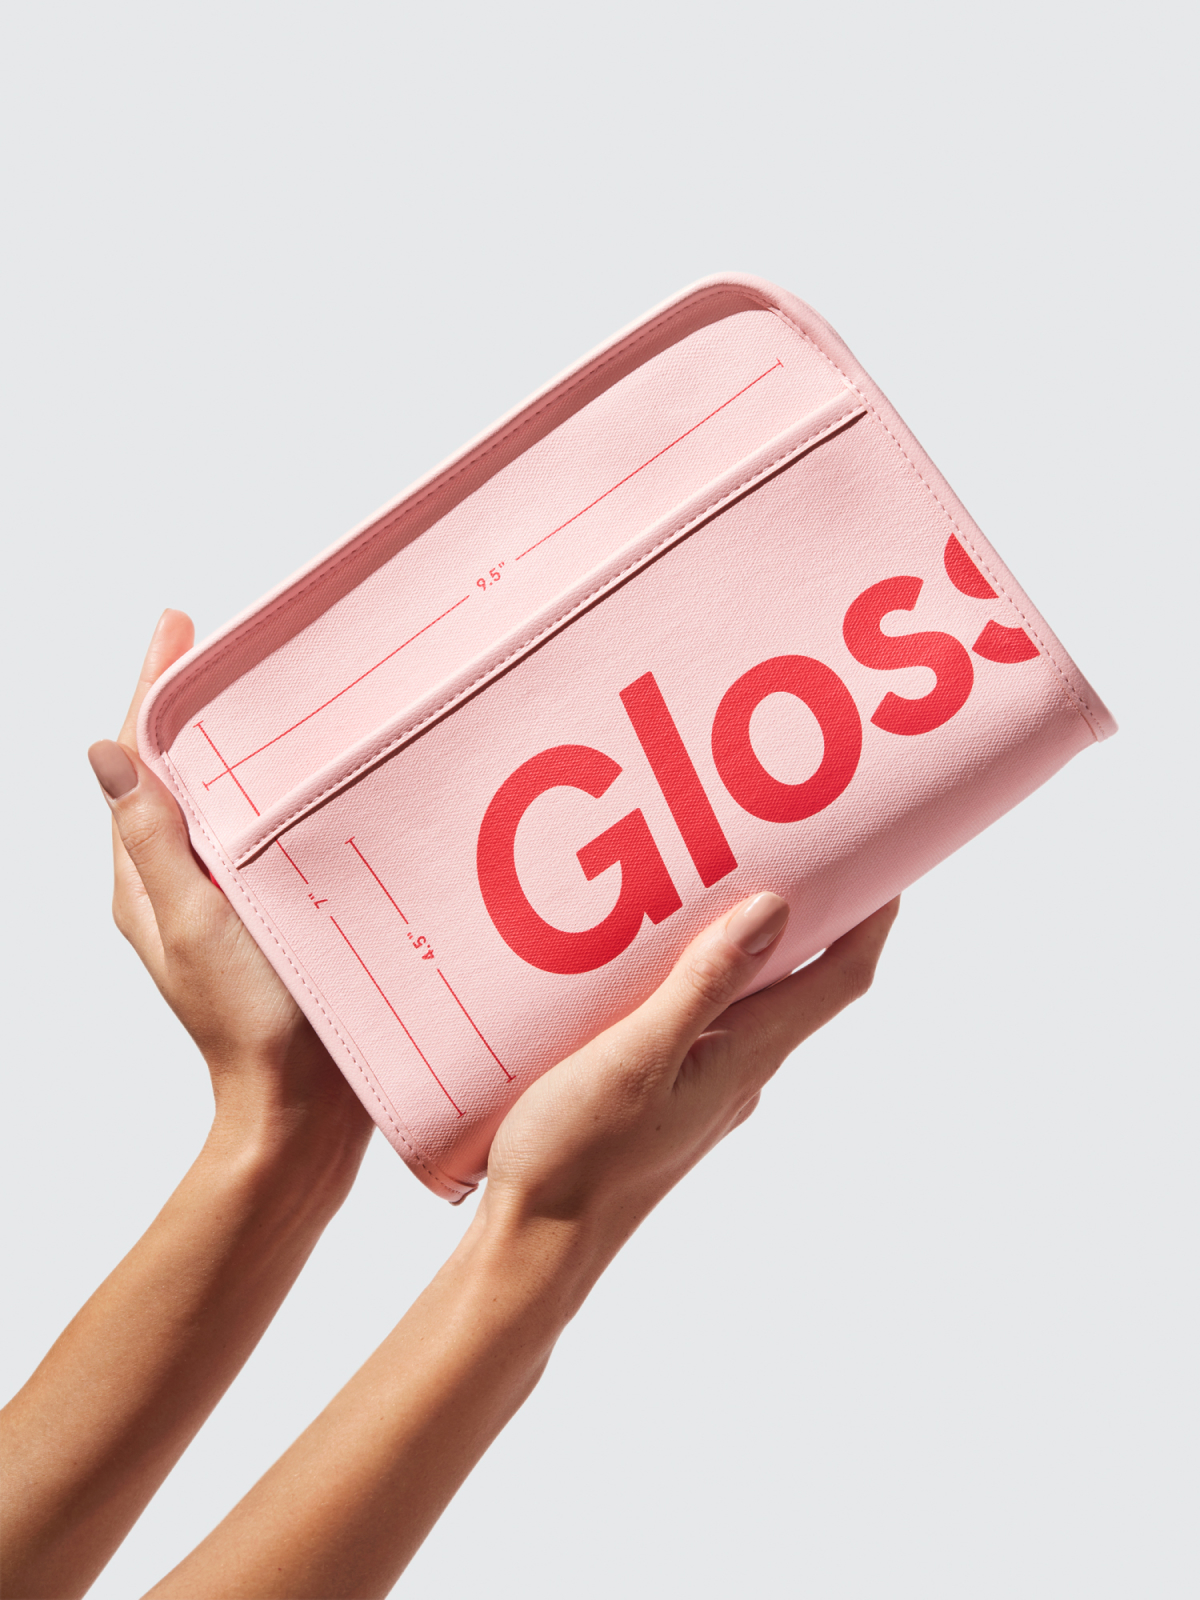 Glossier | The Beauty Bag